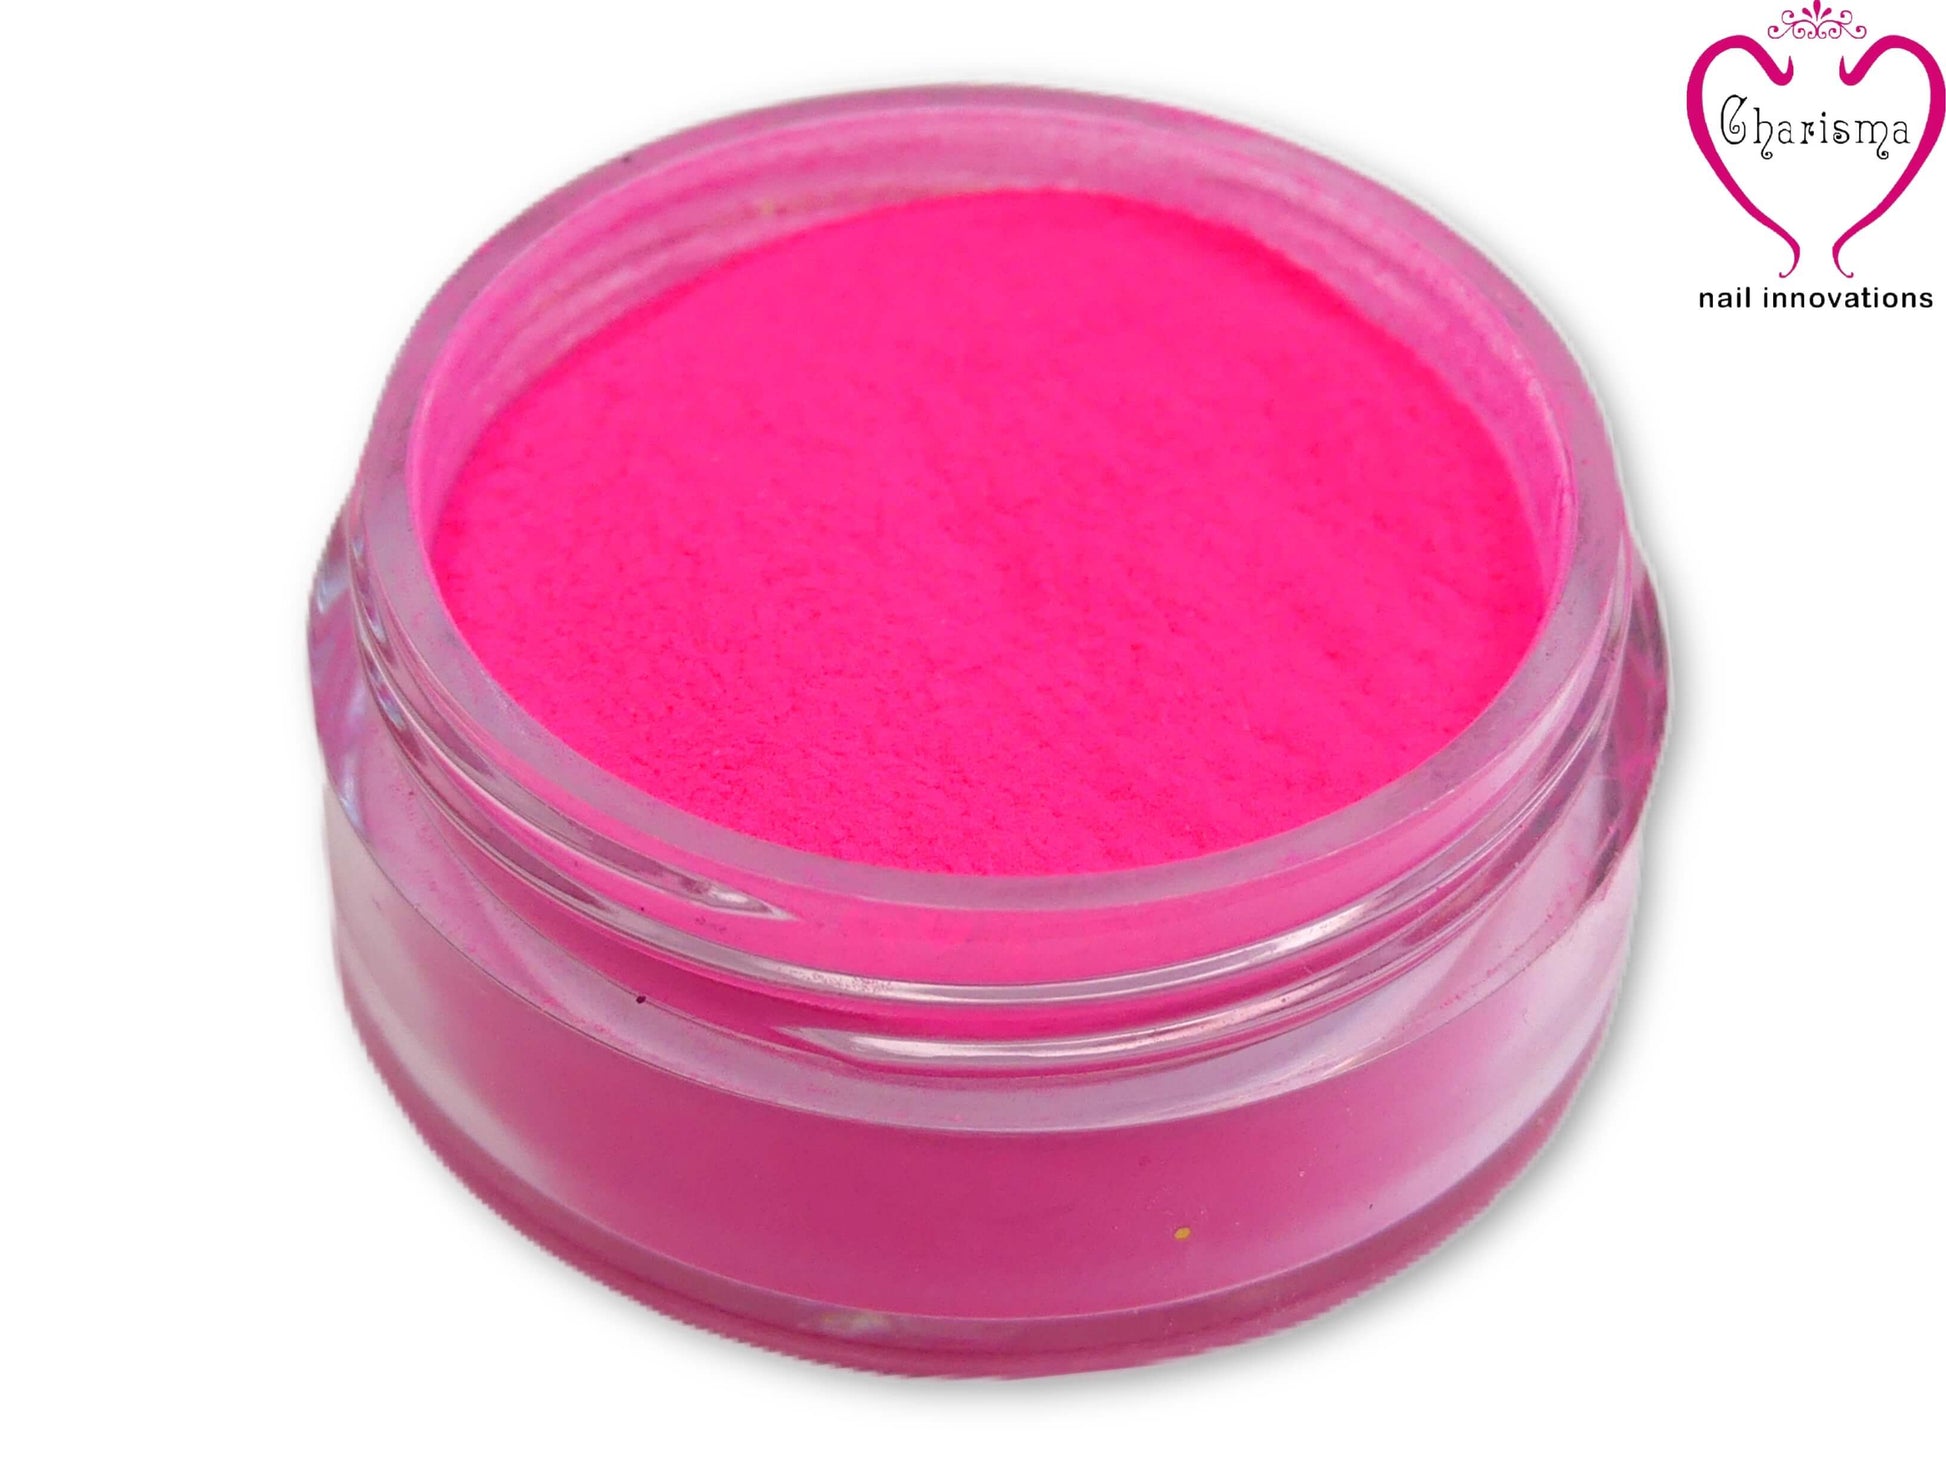 Charisma Nail Acrylic Powder - Neon Pink - My Little Nail Art Shop